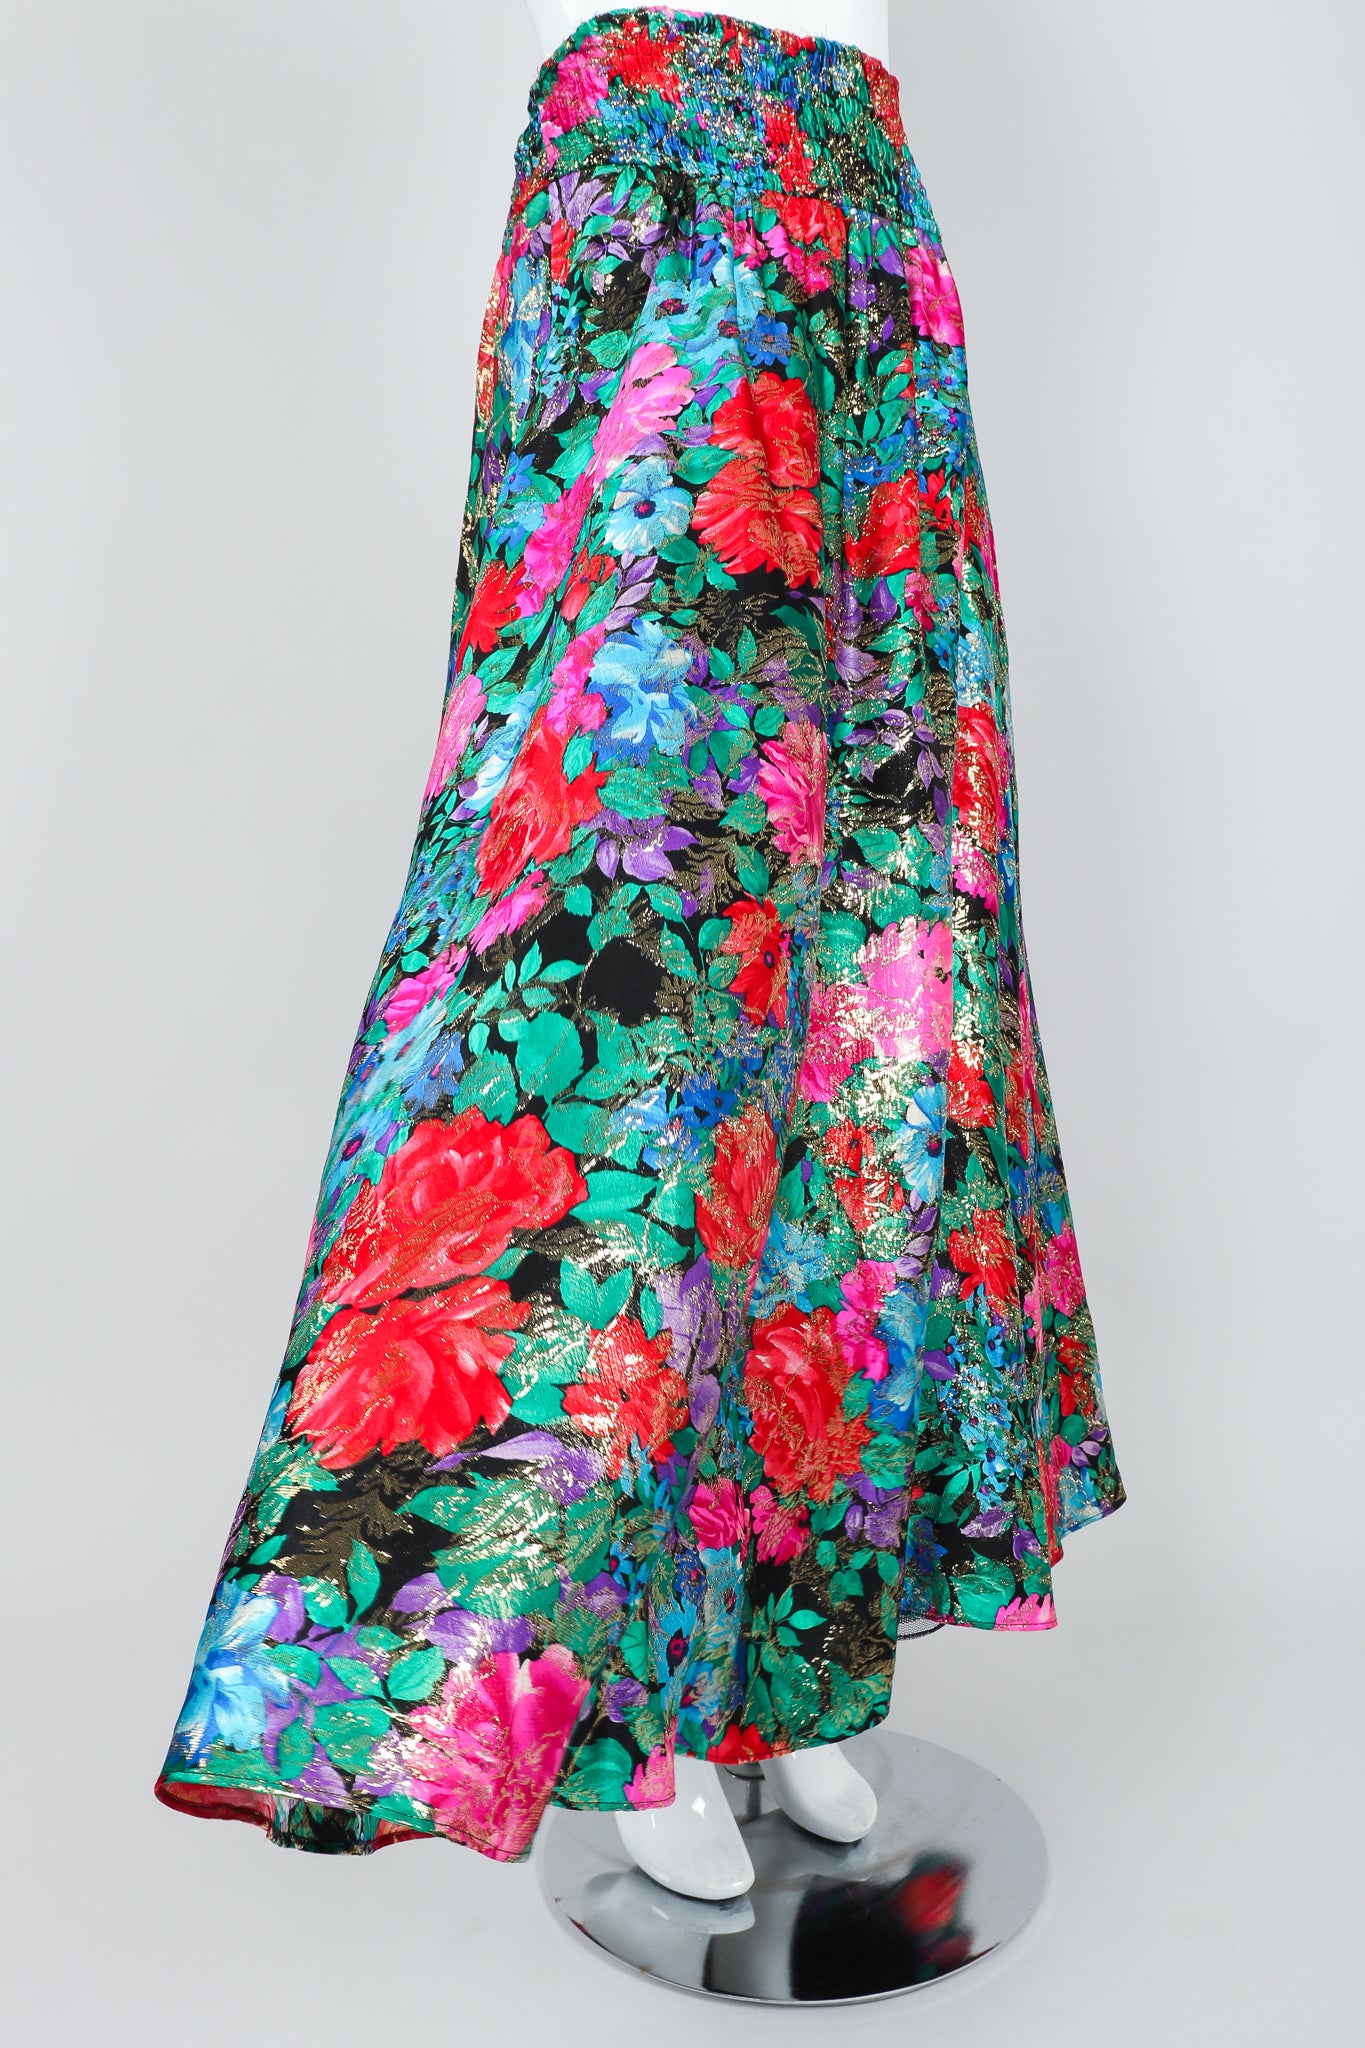 Vintage Diane Freis Metallic Floral Lamé Maxi Skirt on Mannequin, flutter hem